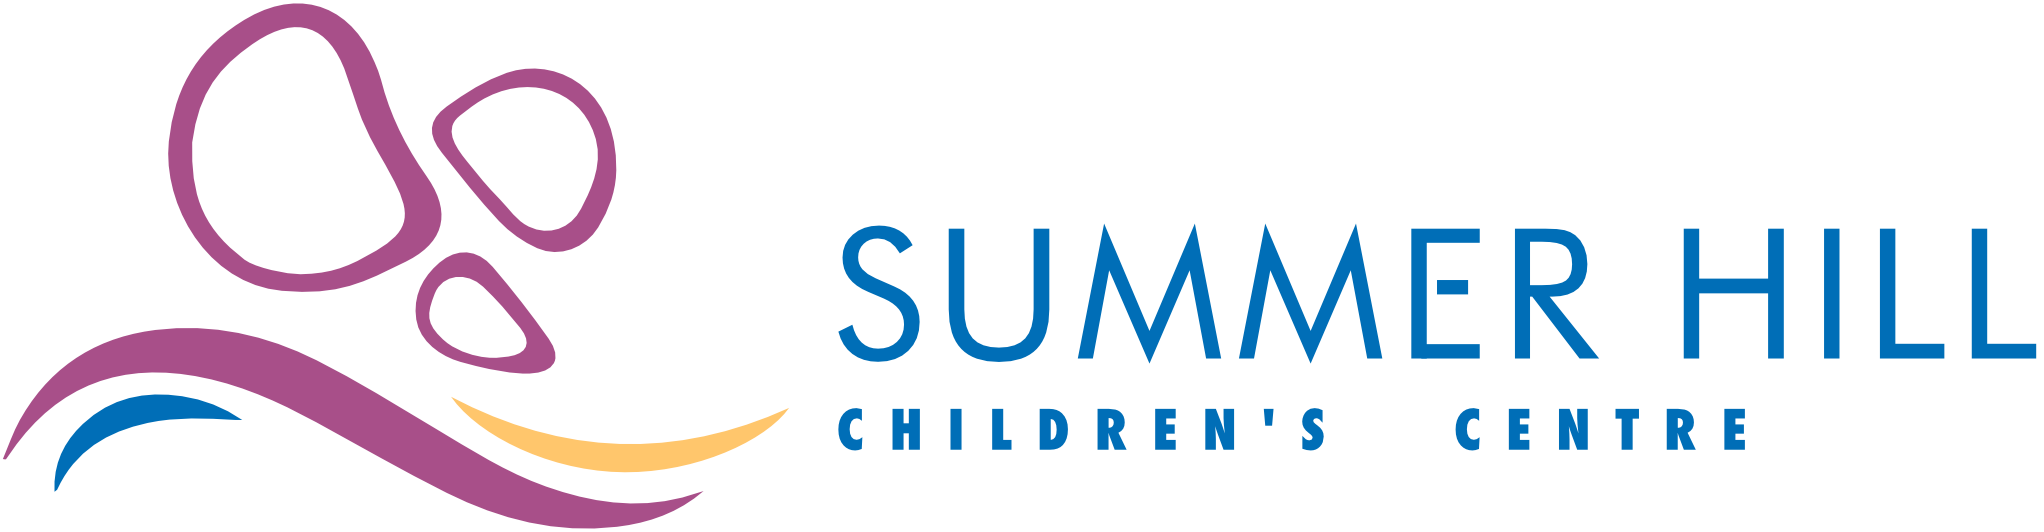 Summer Hill Children's Centre Logo